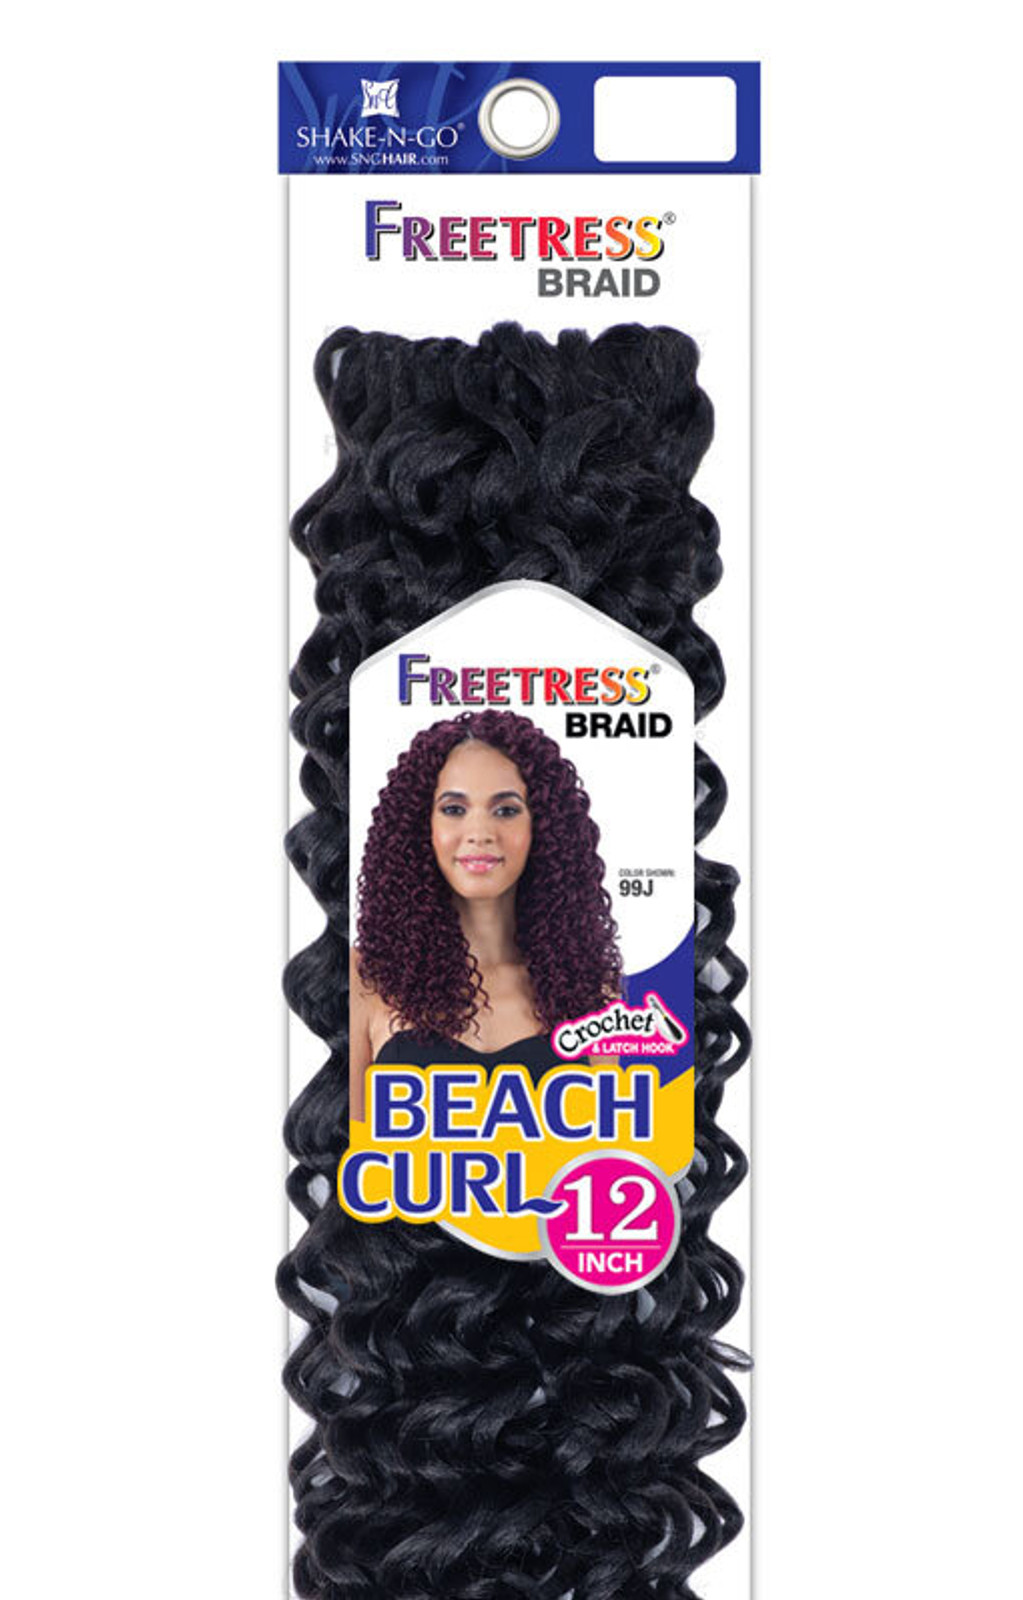 FREETRESS BRAID Synthetic Crochet Hair - BEACH CURL 12